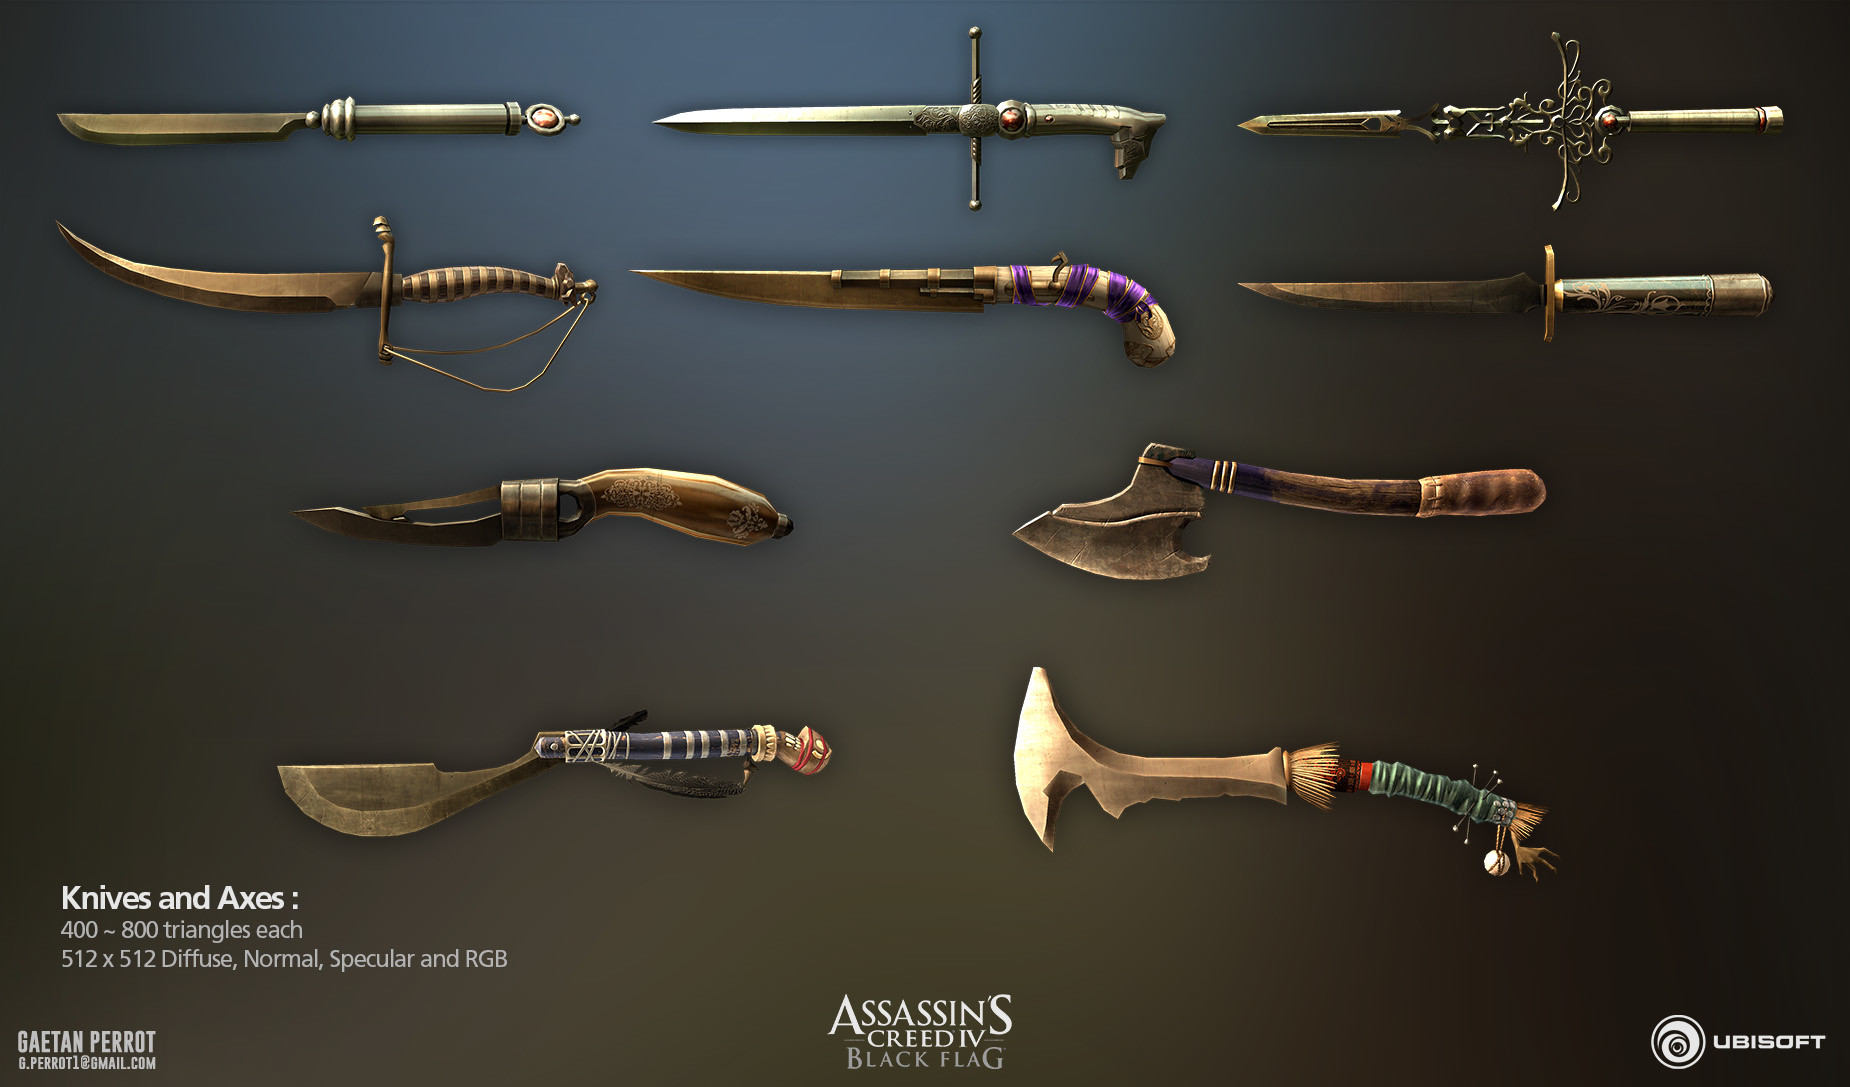 Ассасин крид легендарное оружие. Оружие из Assassins Creed Odyssey. Ассасин Крид 4 оружие кинжал. Оружие из ассасин Крид Одиссея. Оружие из Assassins Creed.